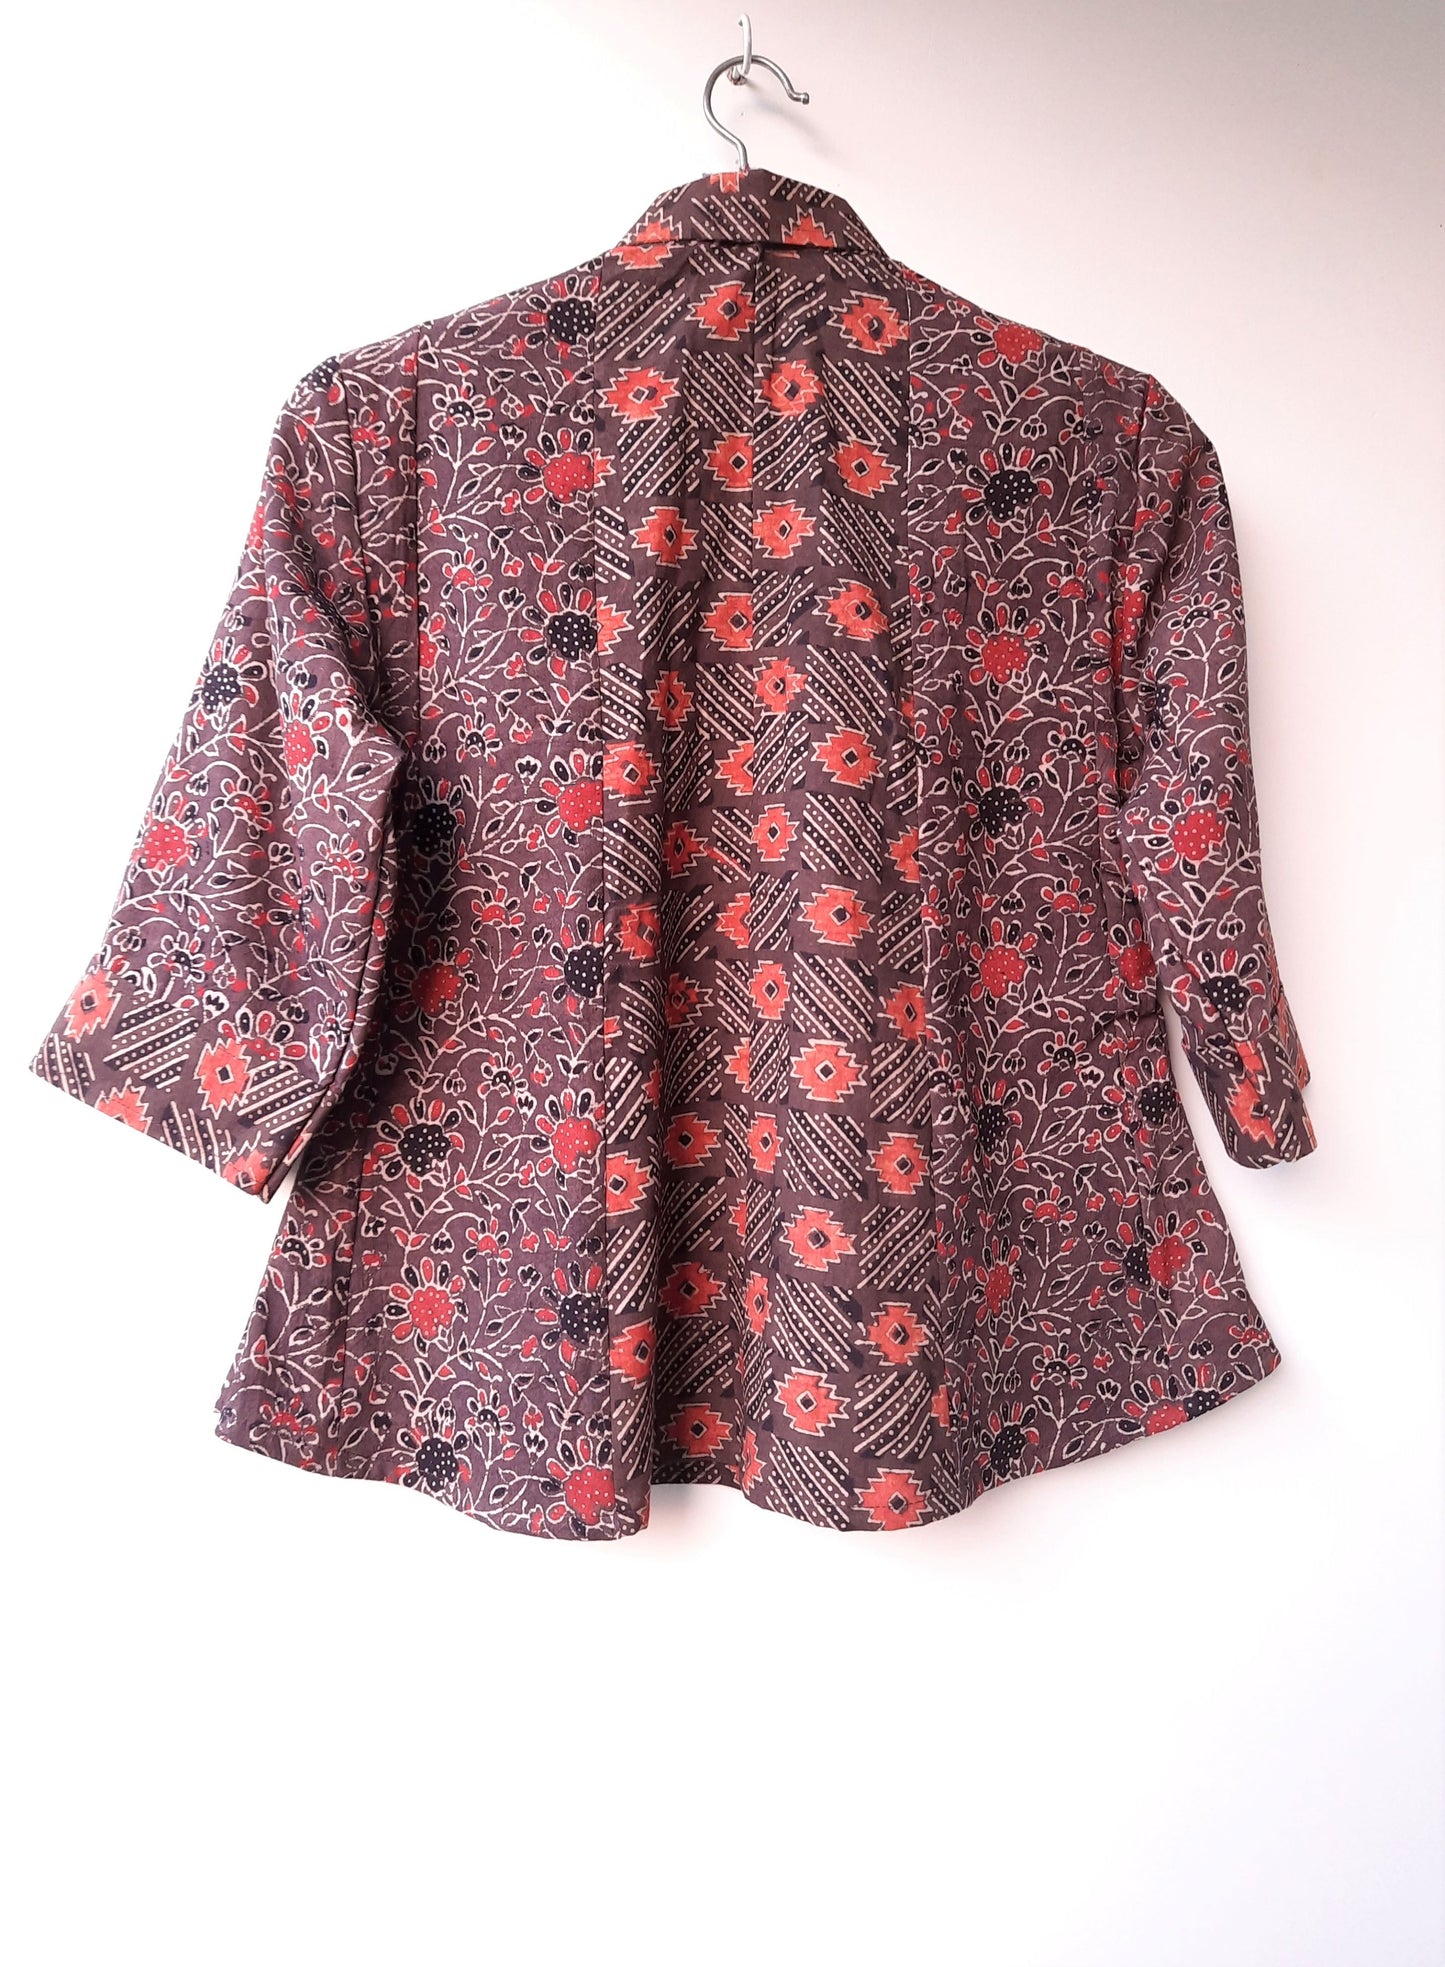 Brown ajrakh women's shirt